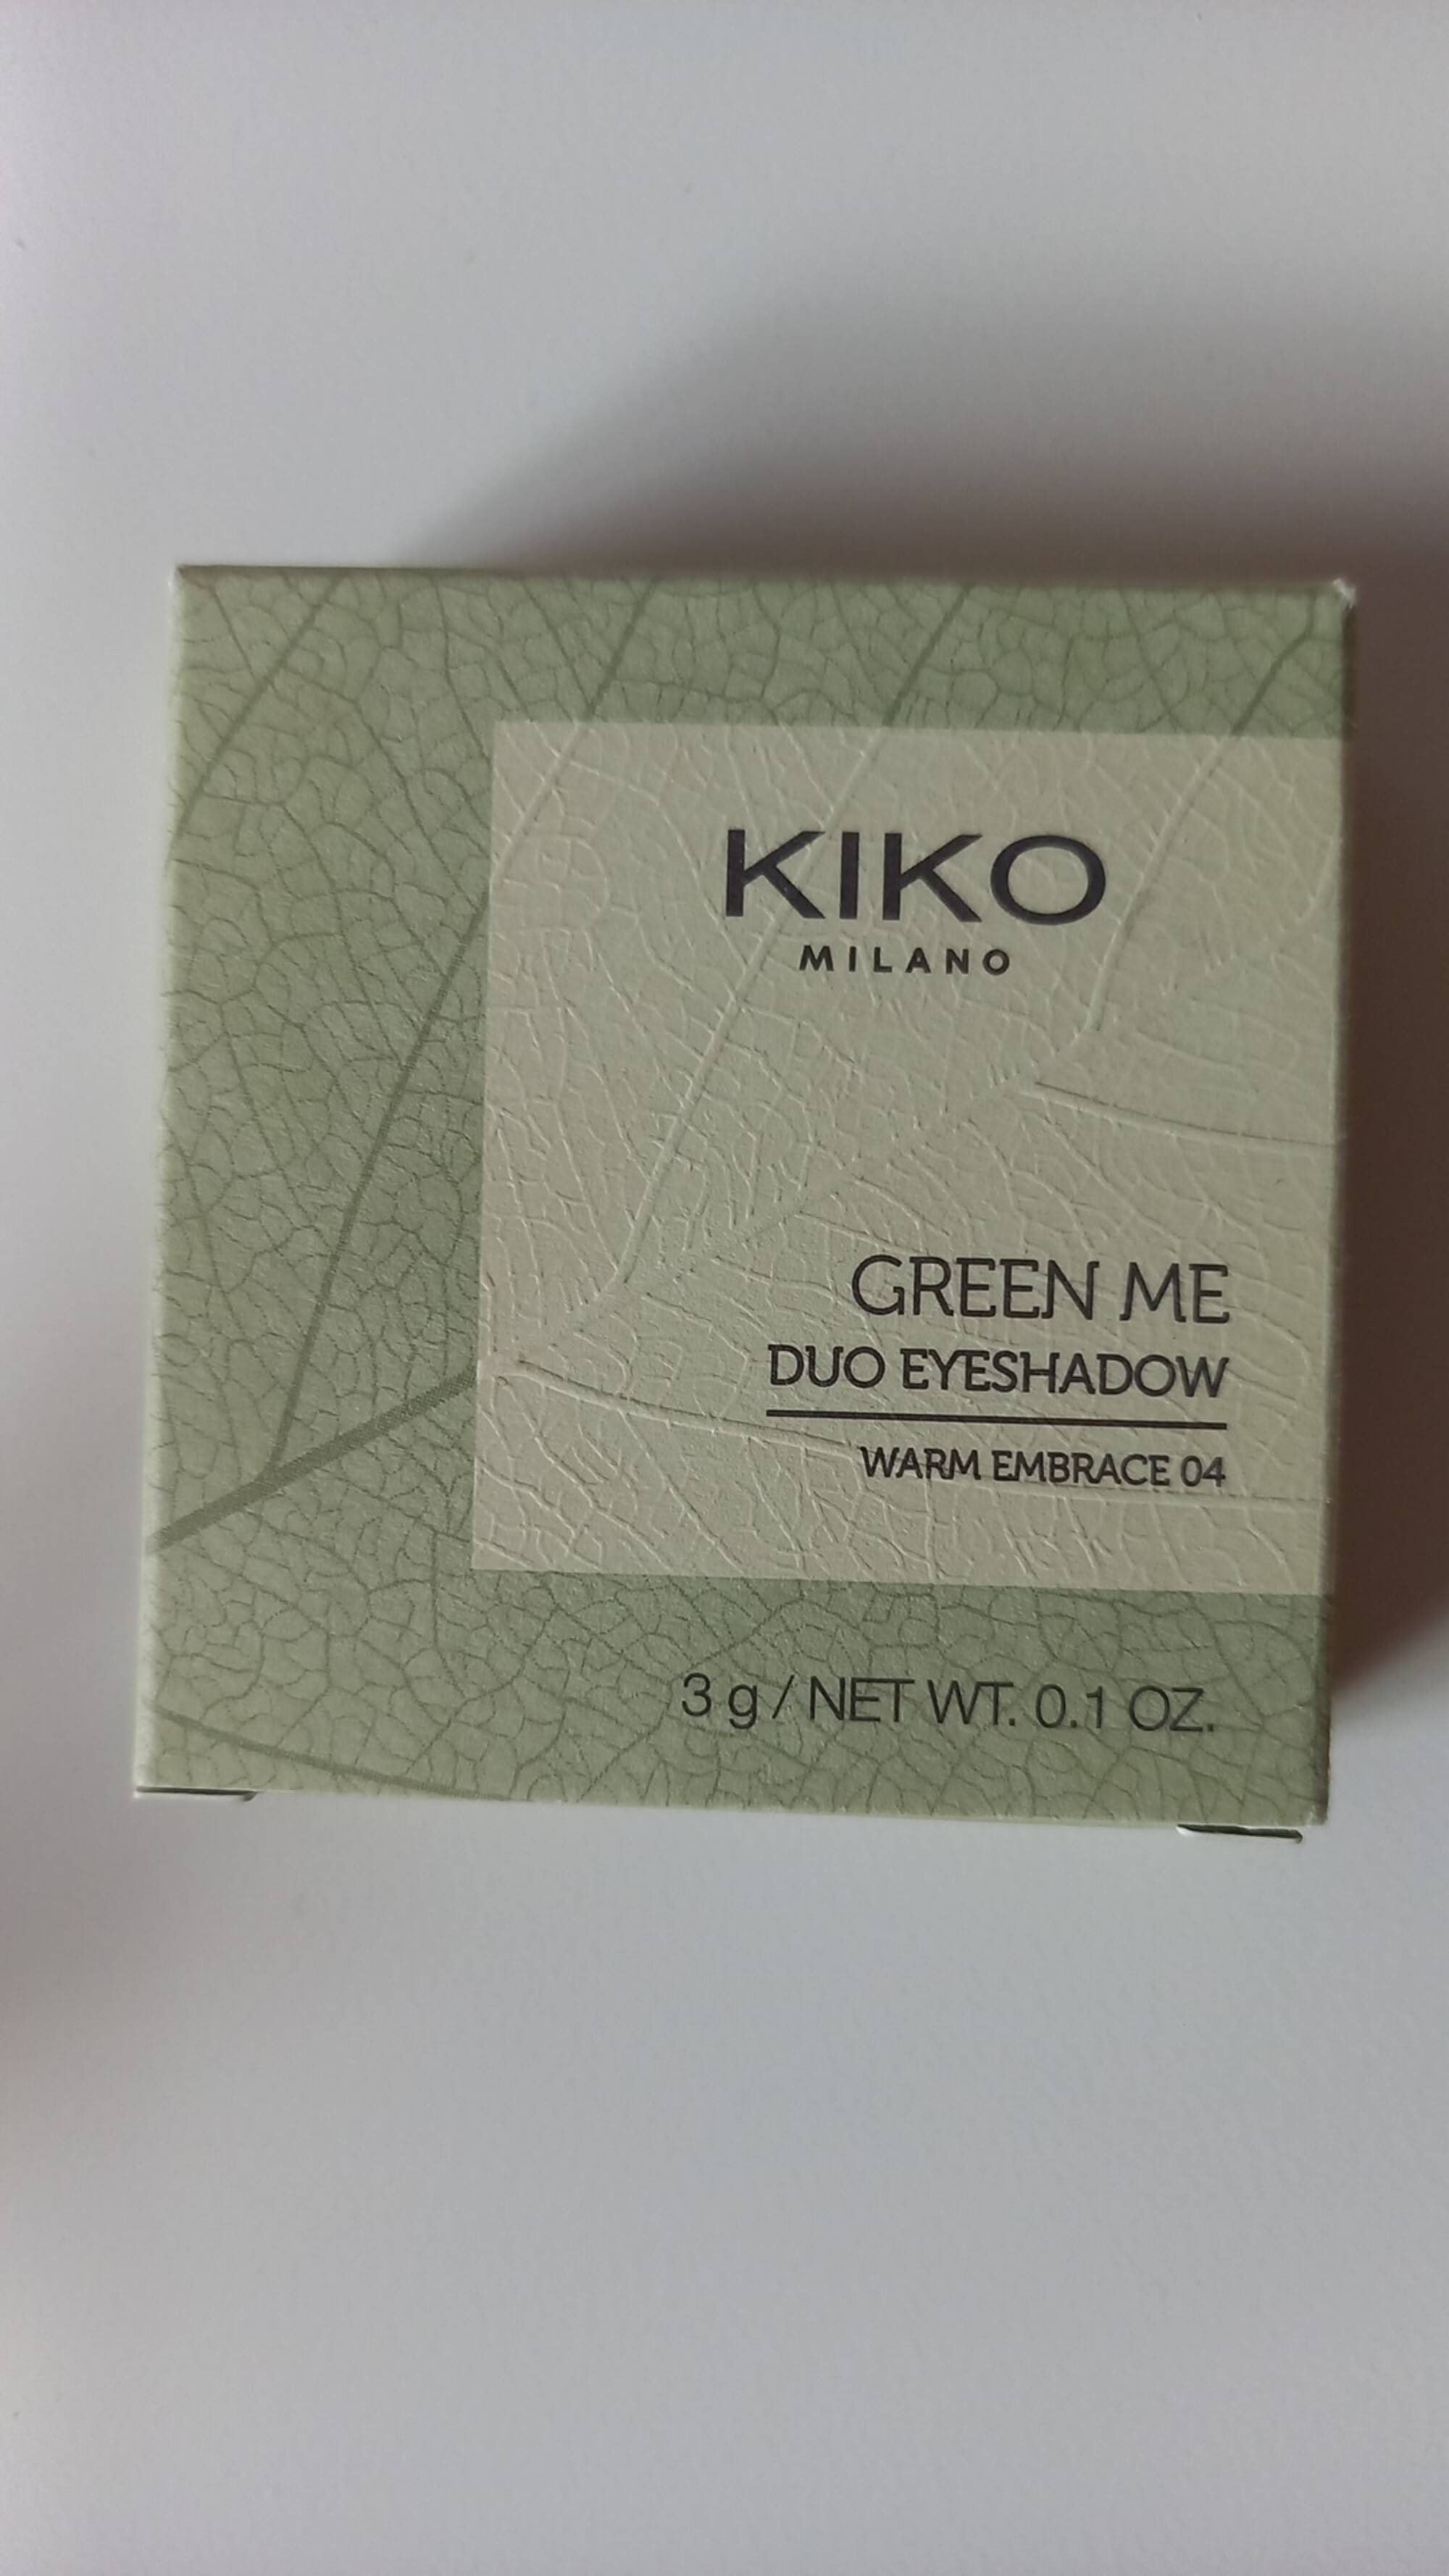 KIKO - Green me - Duo eyeshadow warm embrace 04